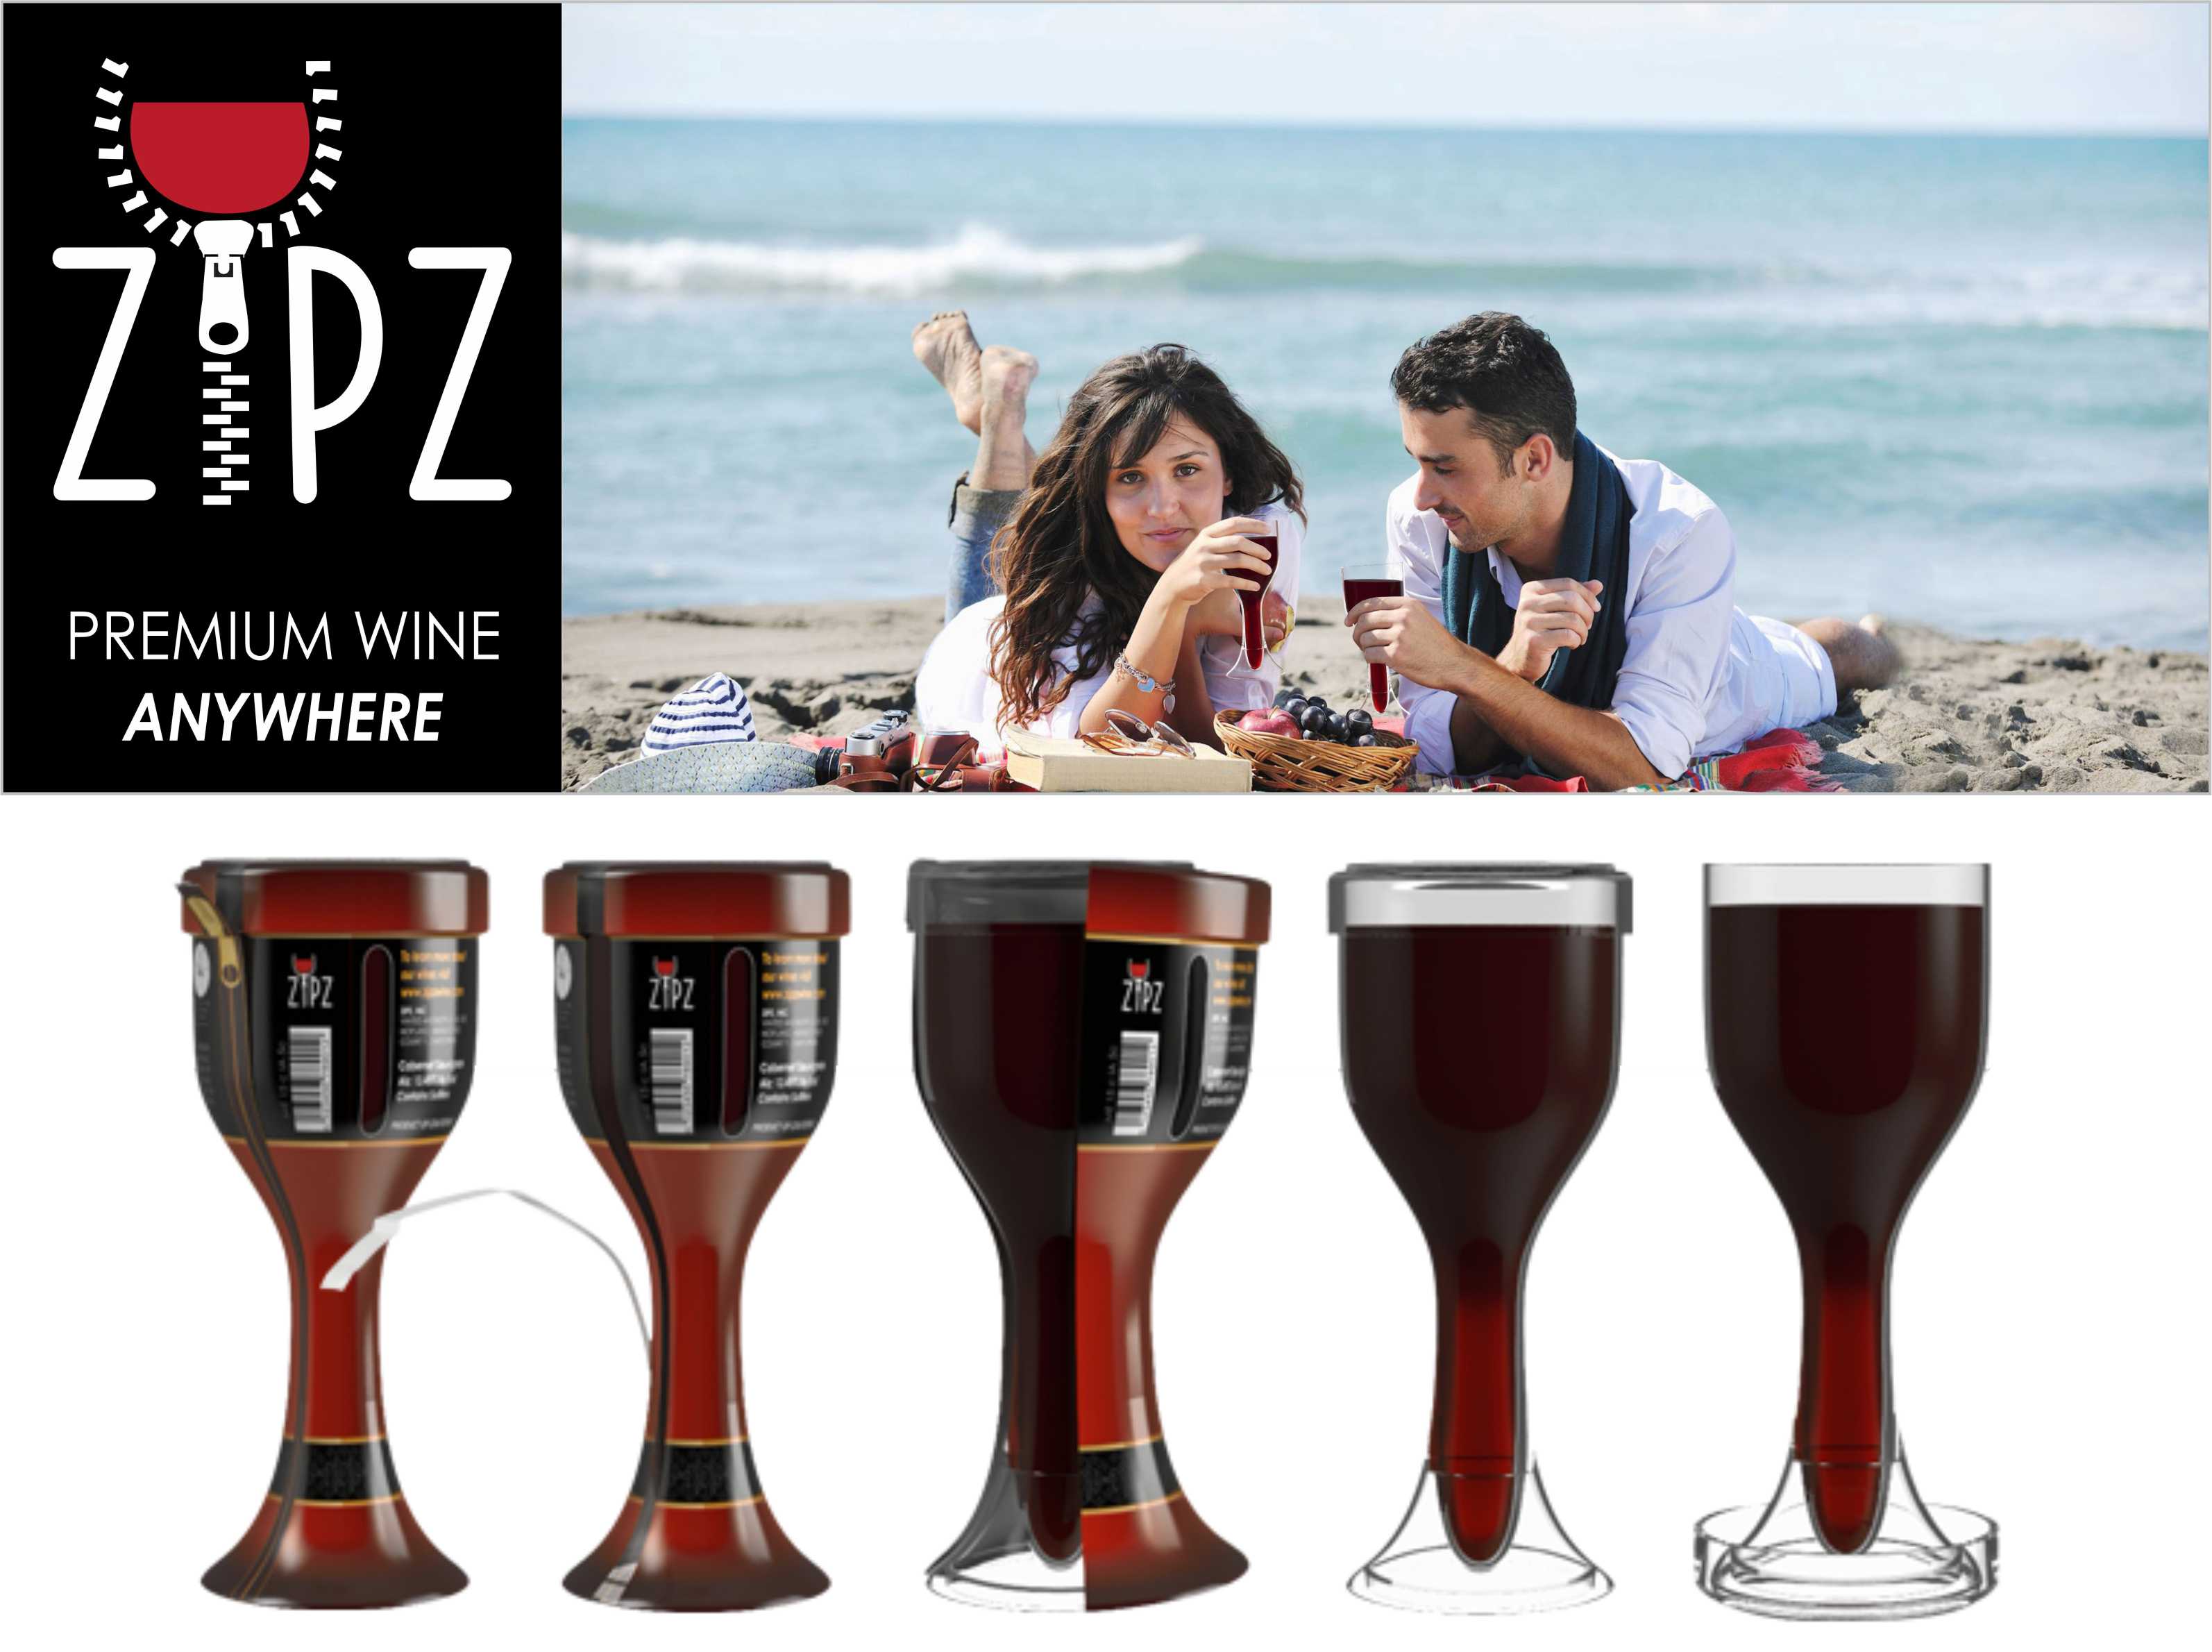 zipz-wine_product-industrial-design-firm-company-2